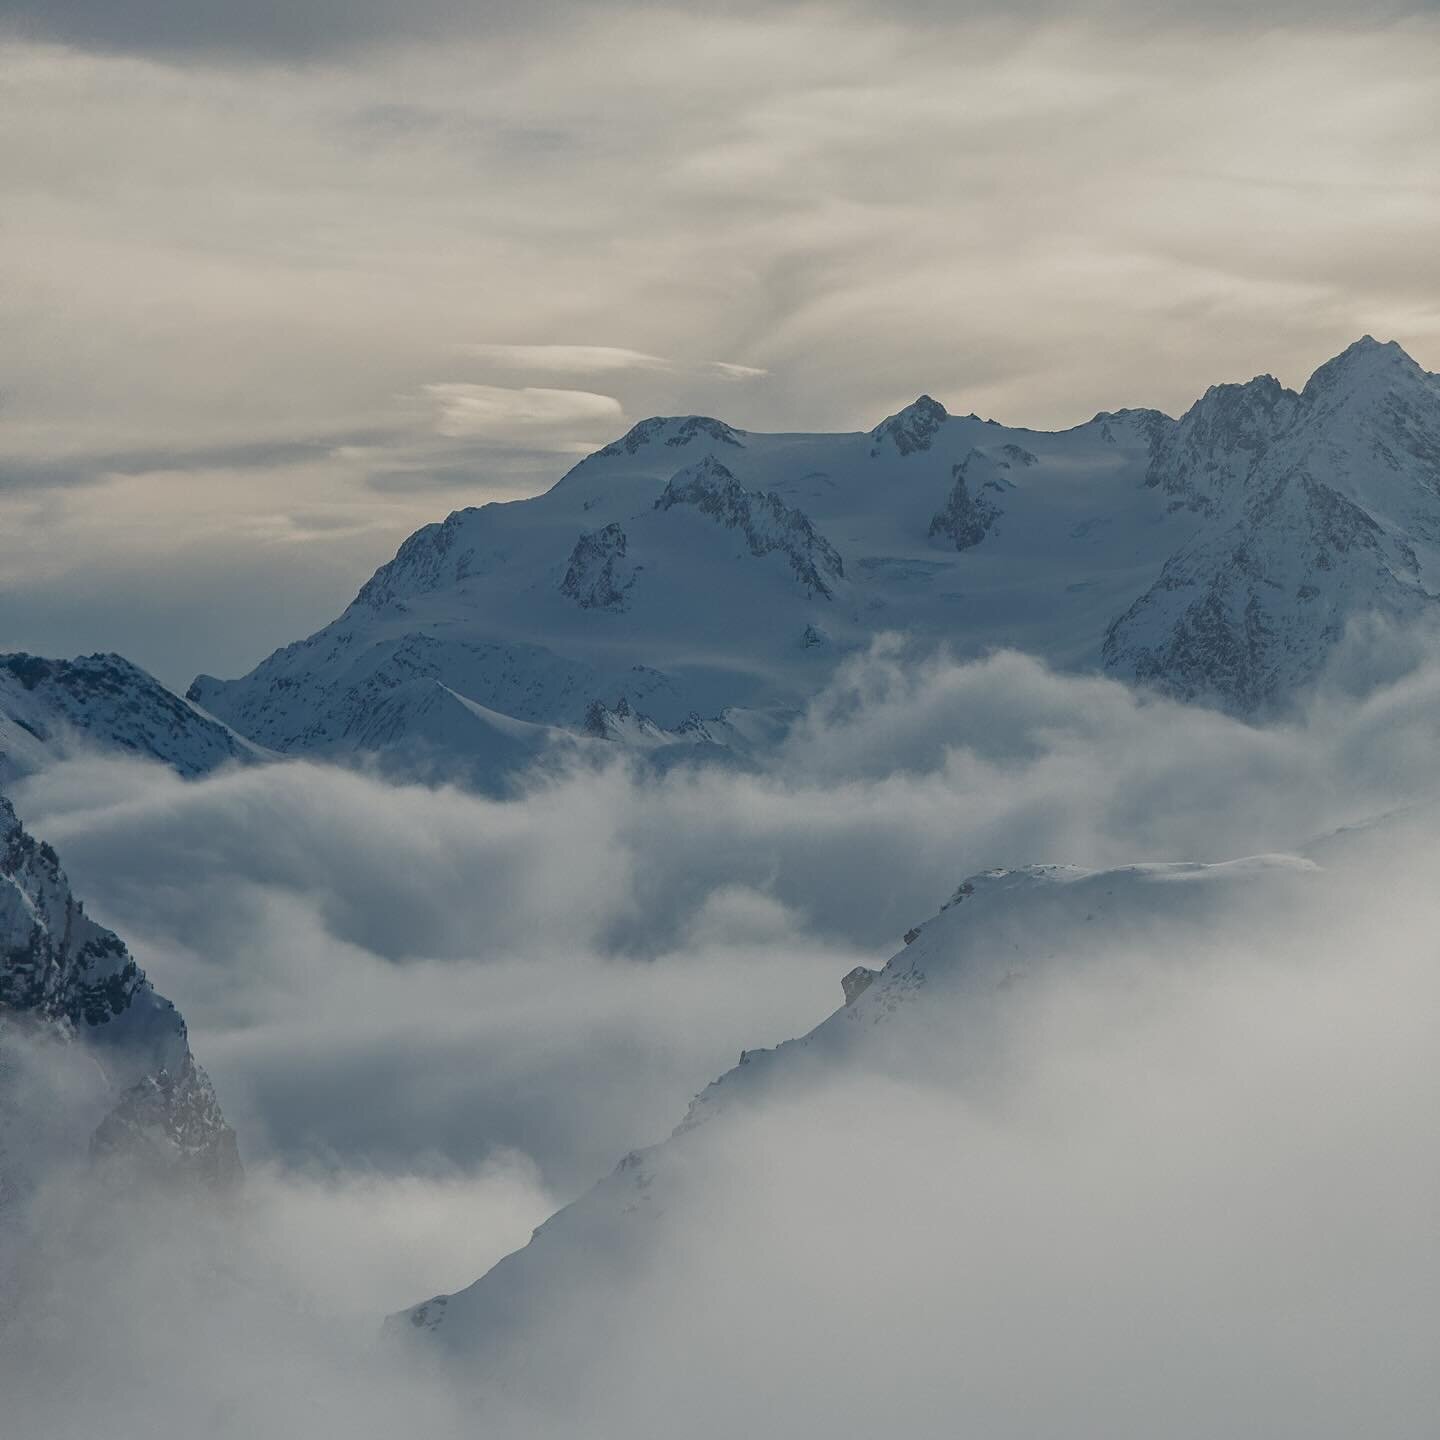 December in French alps 
.
.
.
#meribelfranceskiing #ski #skiing #landscapephotography #mountains